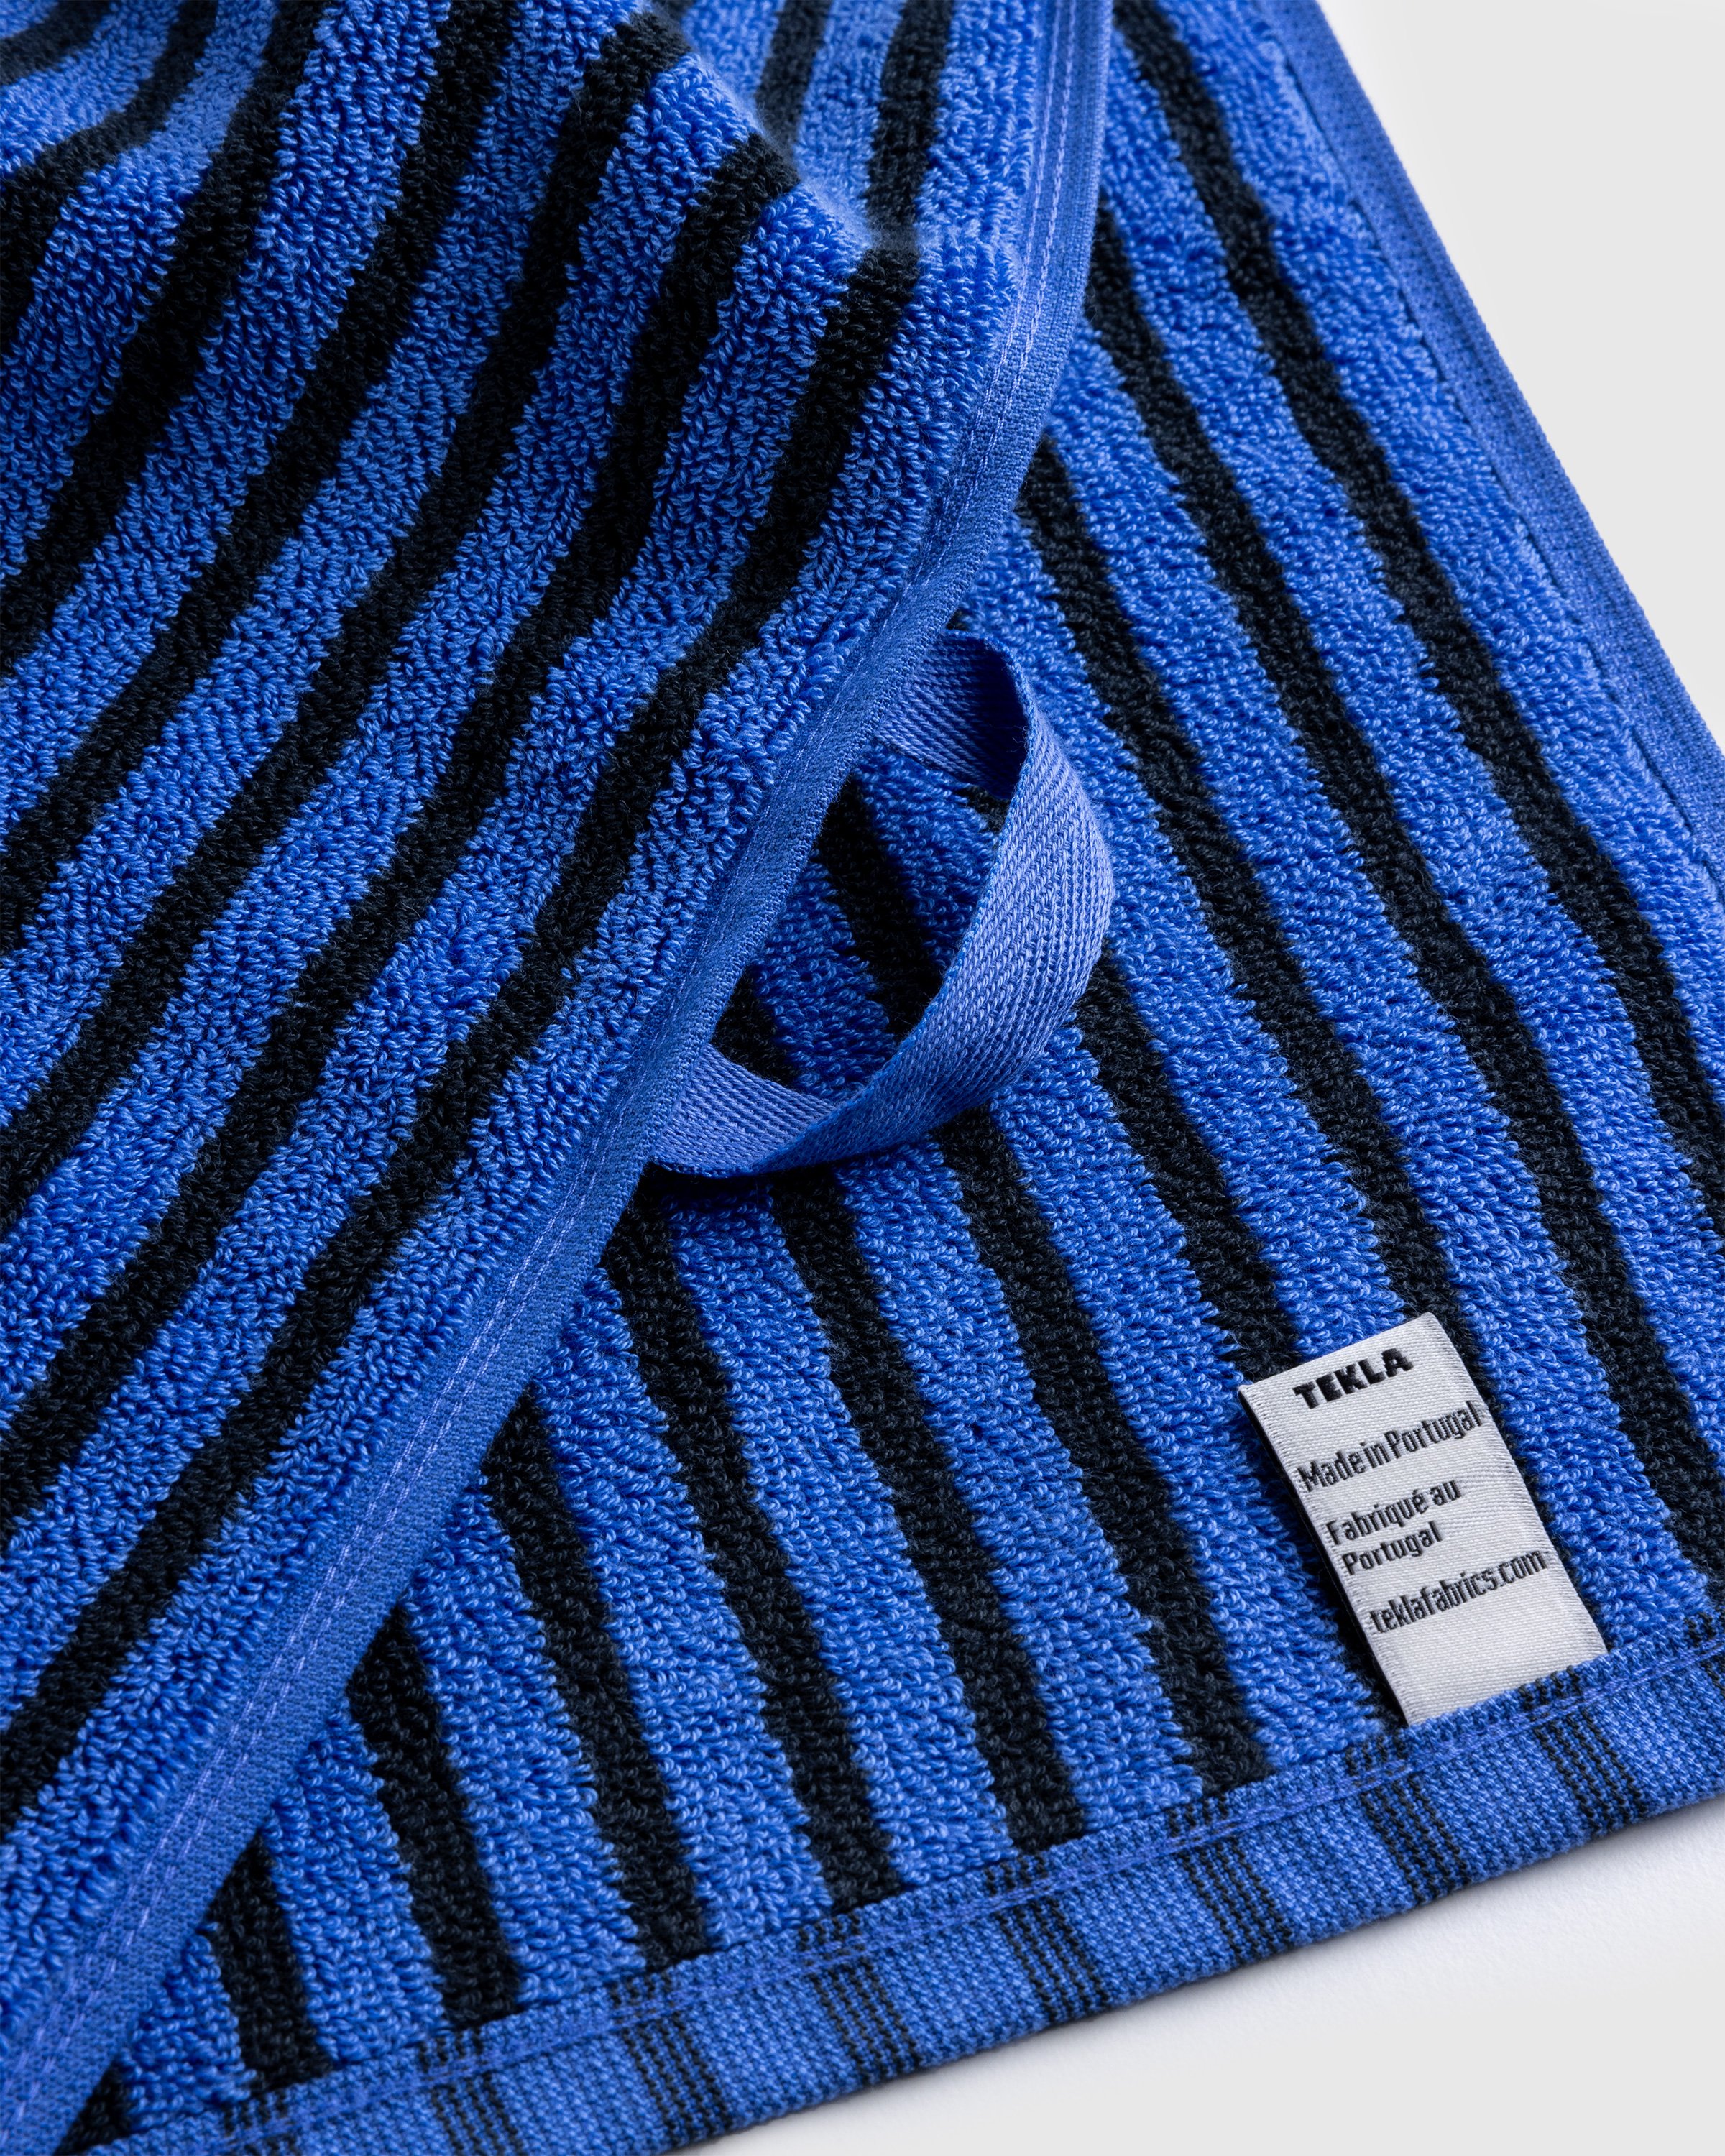 Tekla - Hand Towel Blue&Black - Lifestyle - Blue - Image 4